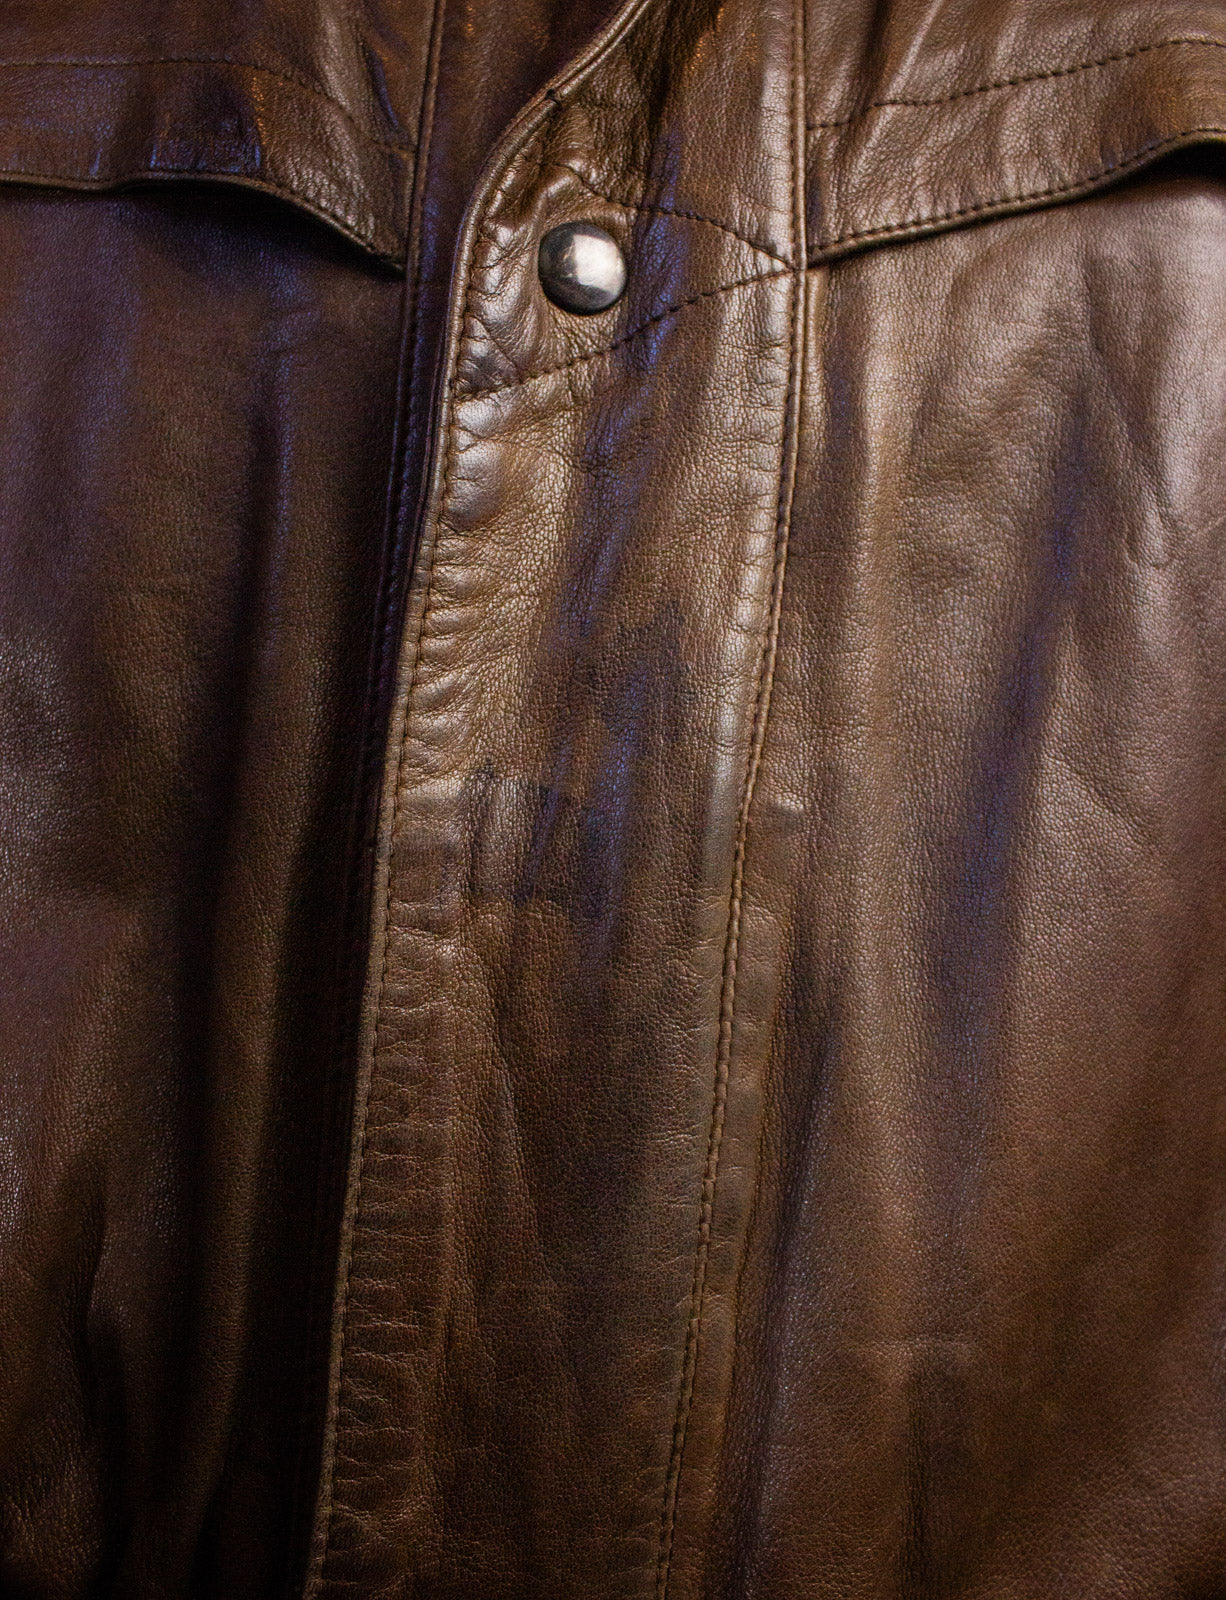 Vintage Brown Leather Jacket with Shoulder Flaps 80s XL